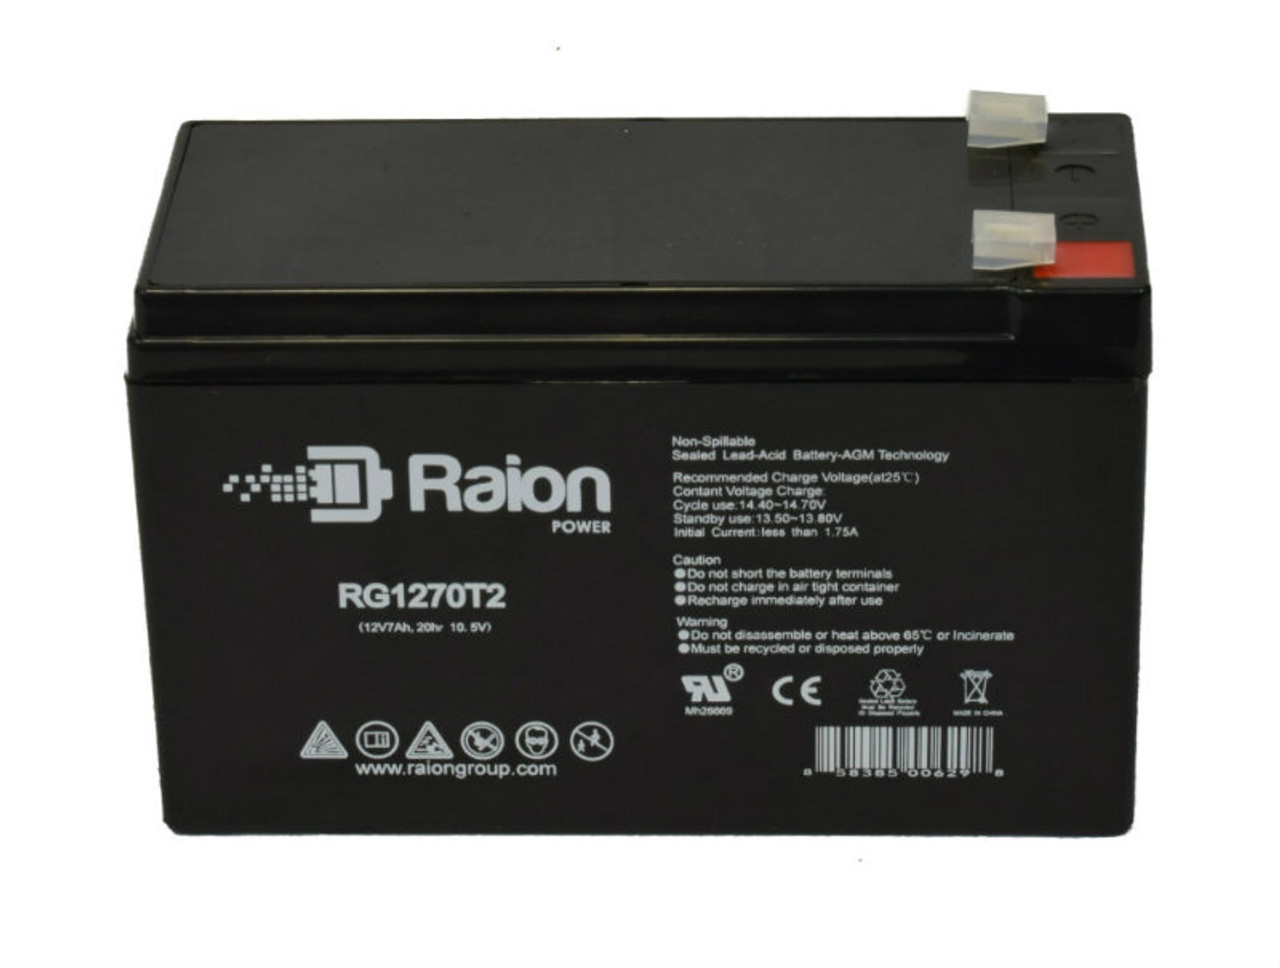 Raion Power RG1270T1 12V 7Ah Lead Acid Battery for Infrasonics Adult Star 1500